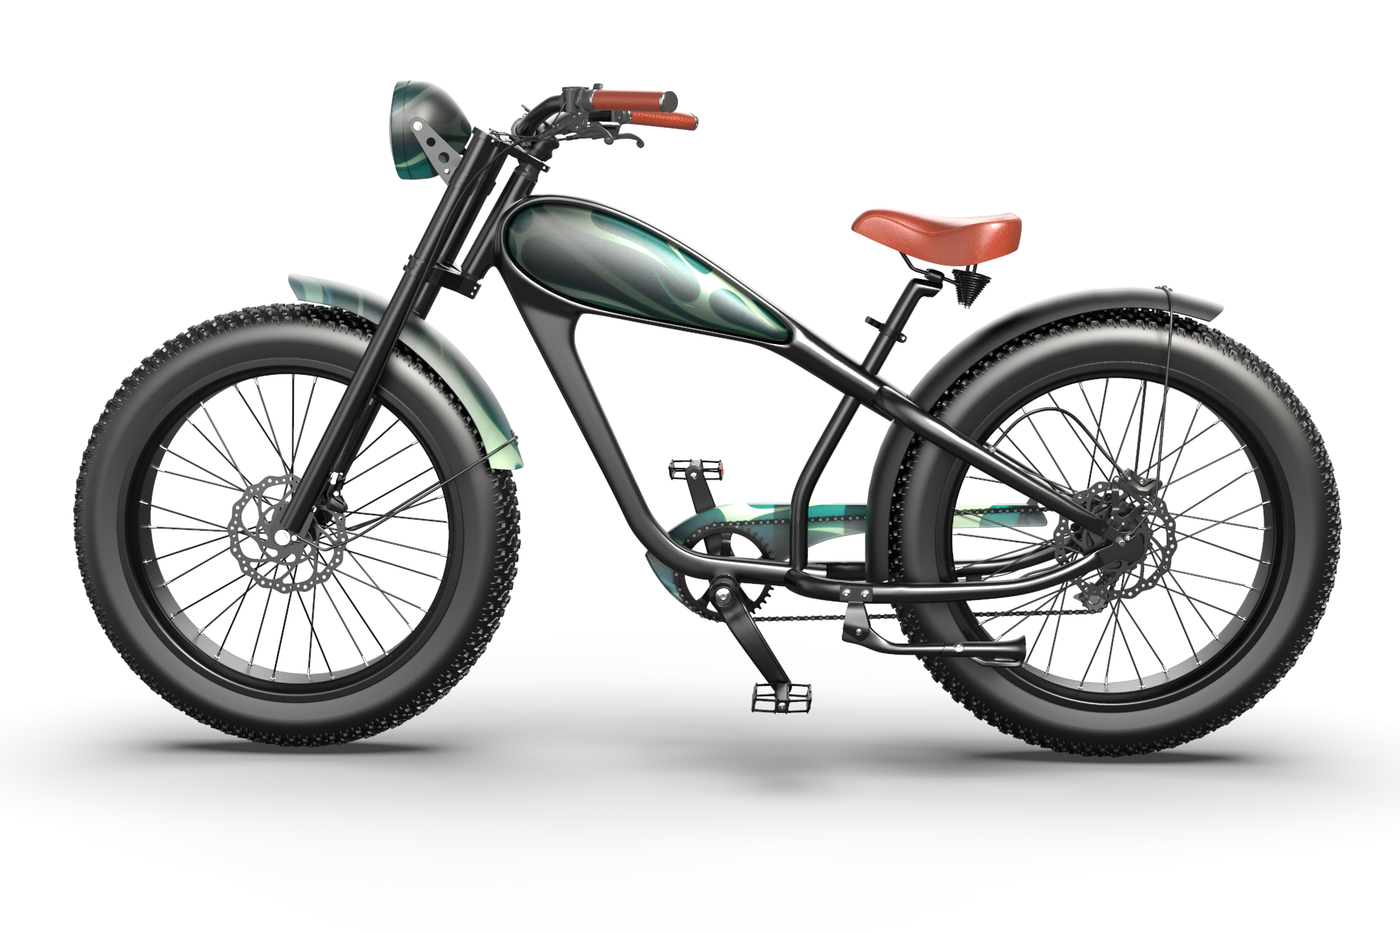 Rock & Roll Custom Electric Bike with Tribal Flames Design